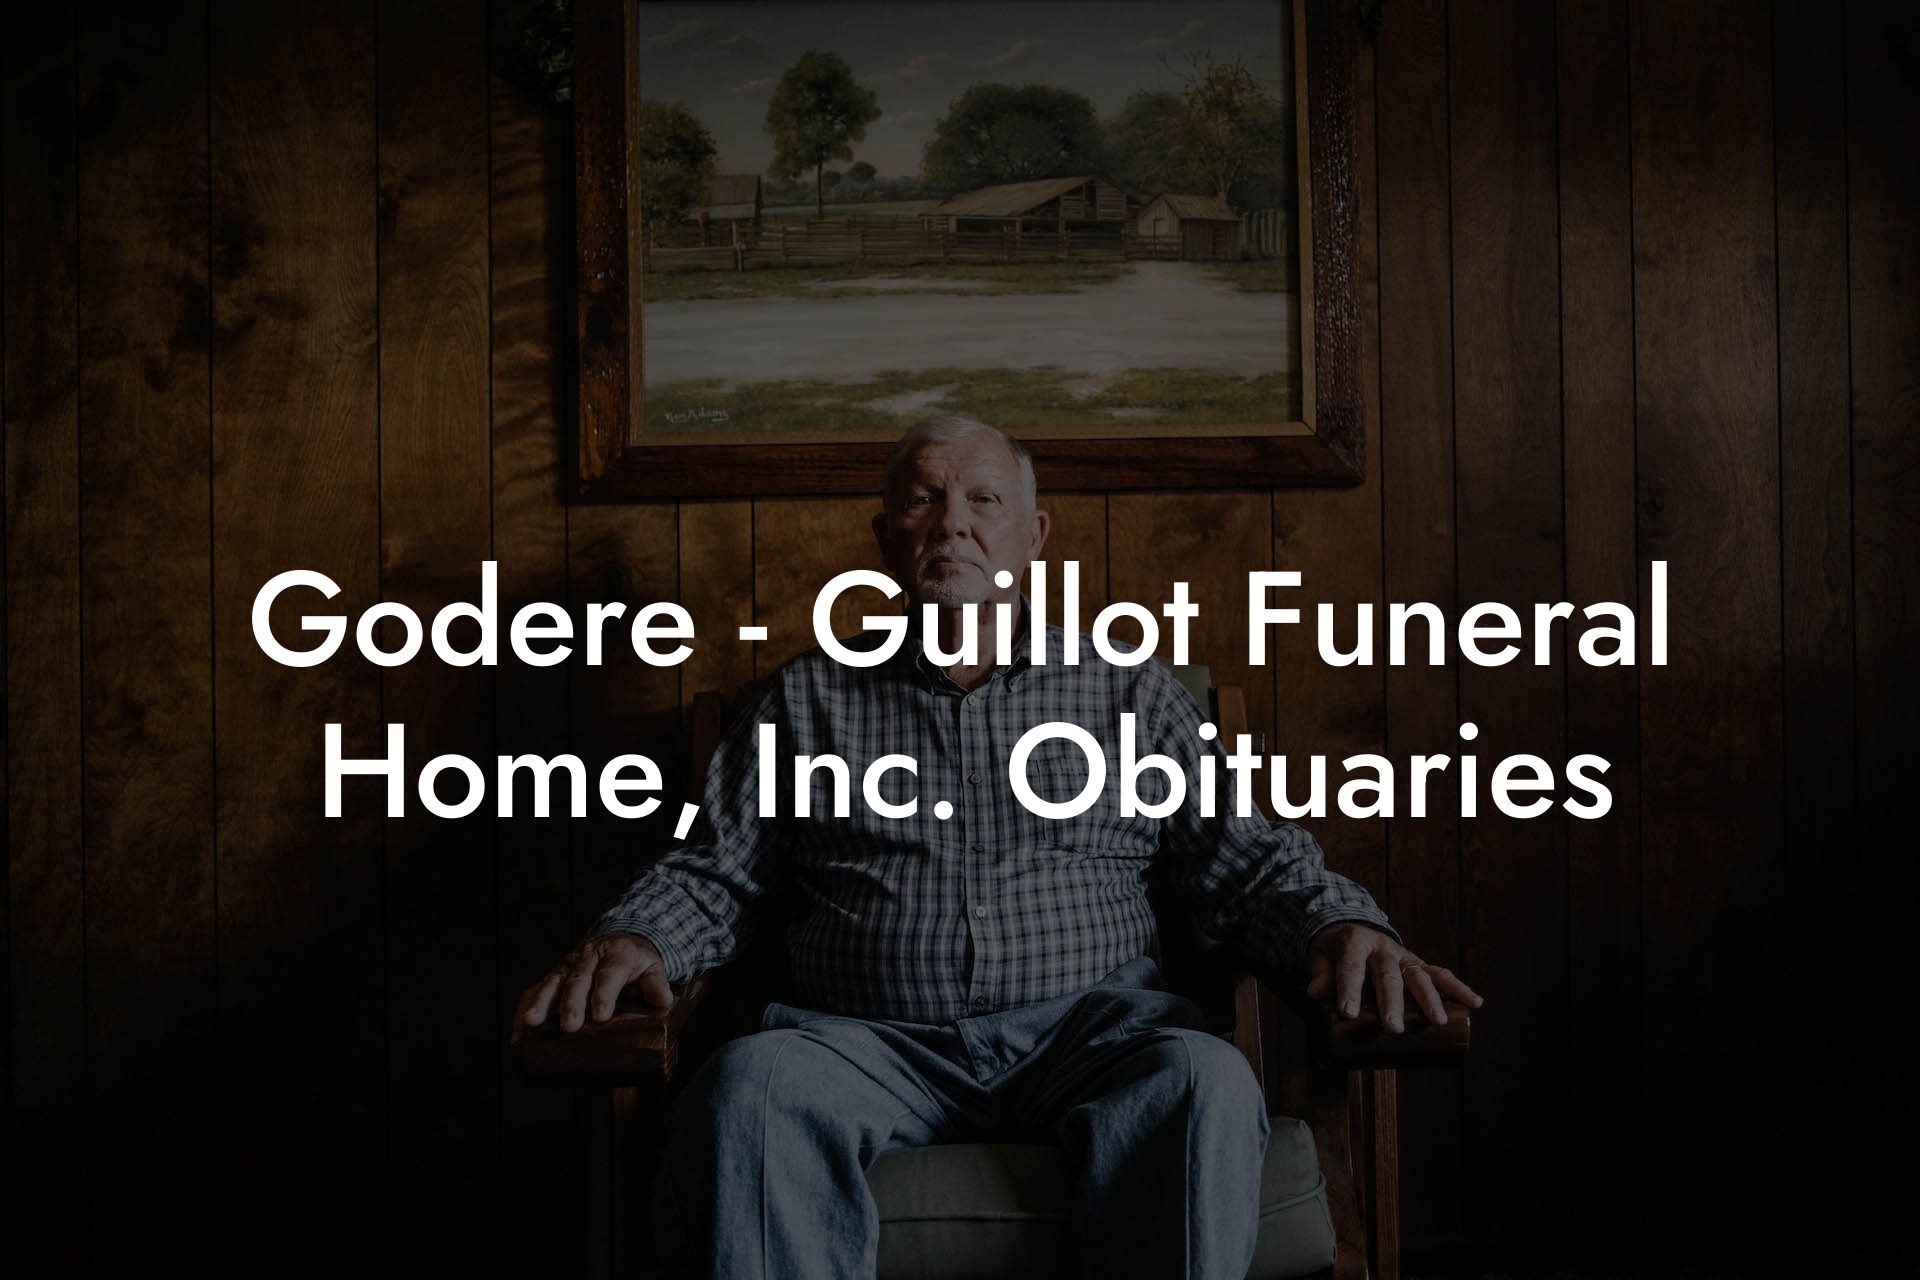 Godere - Guillot Funeral Home, Inc. Obituaries